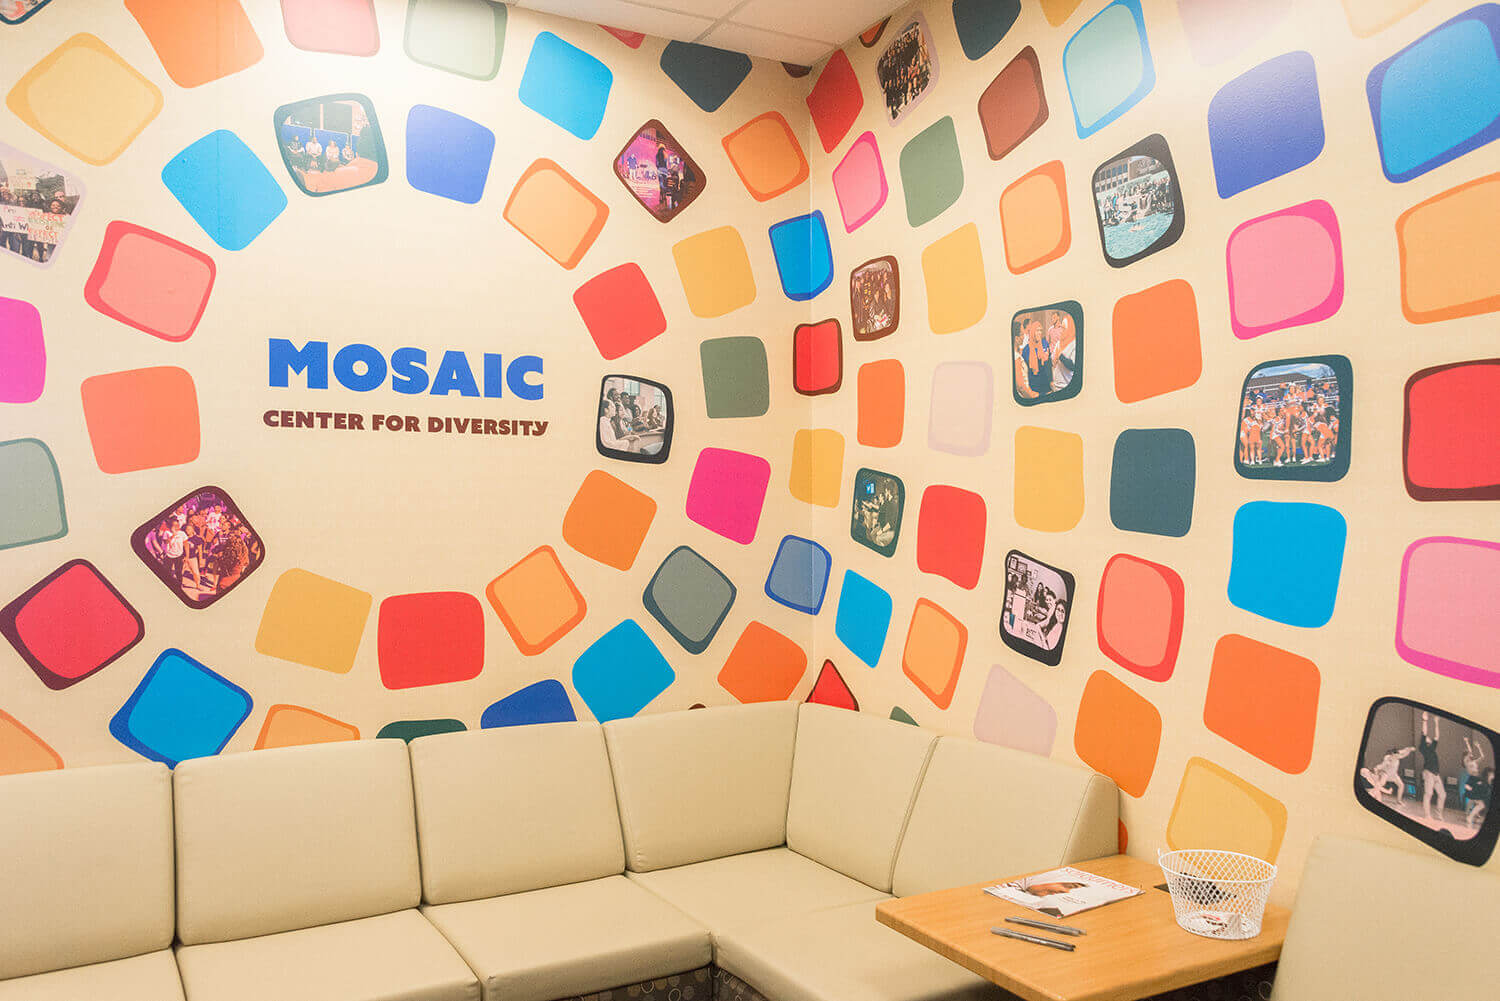 Mosaic Center